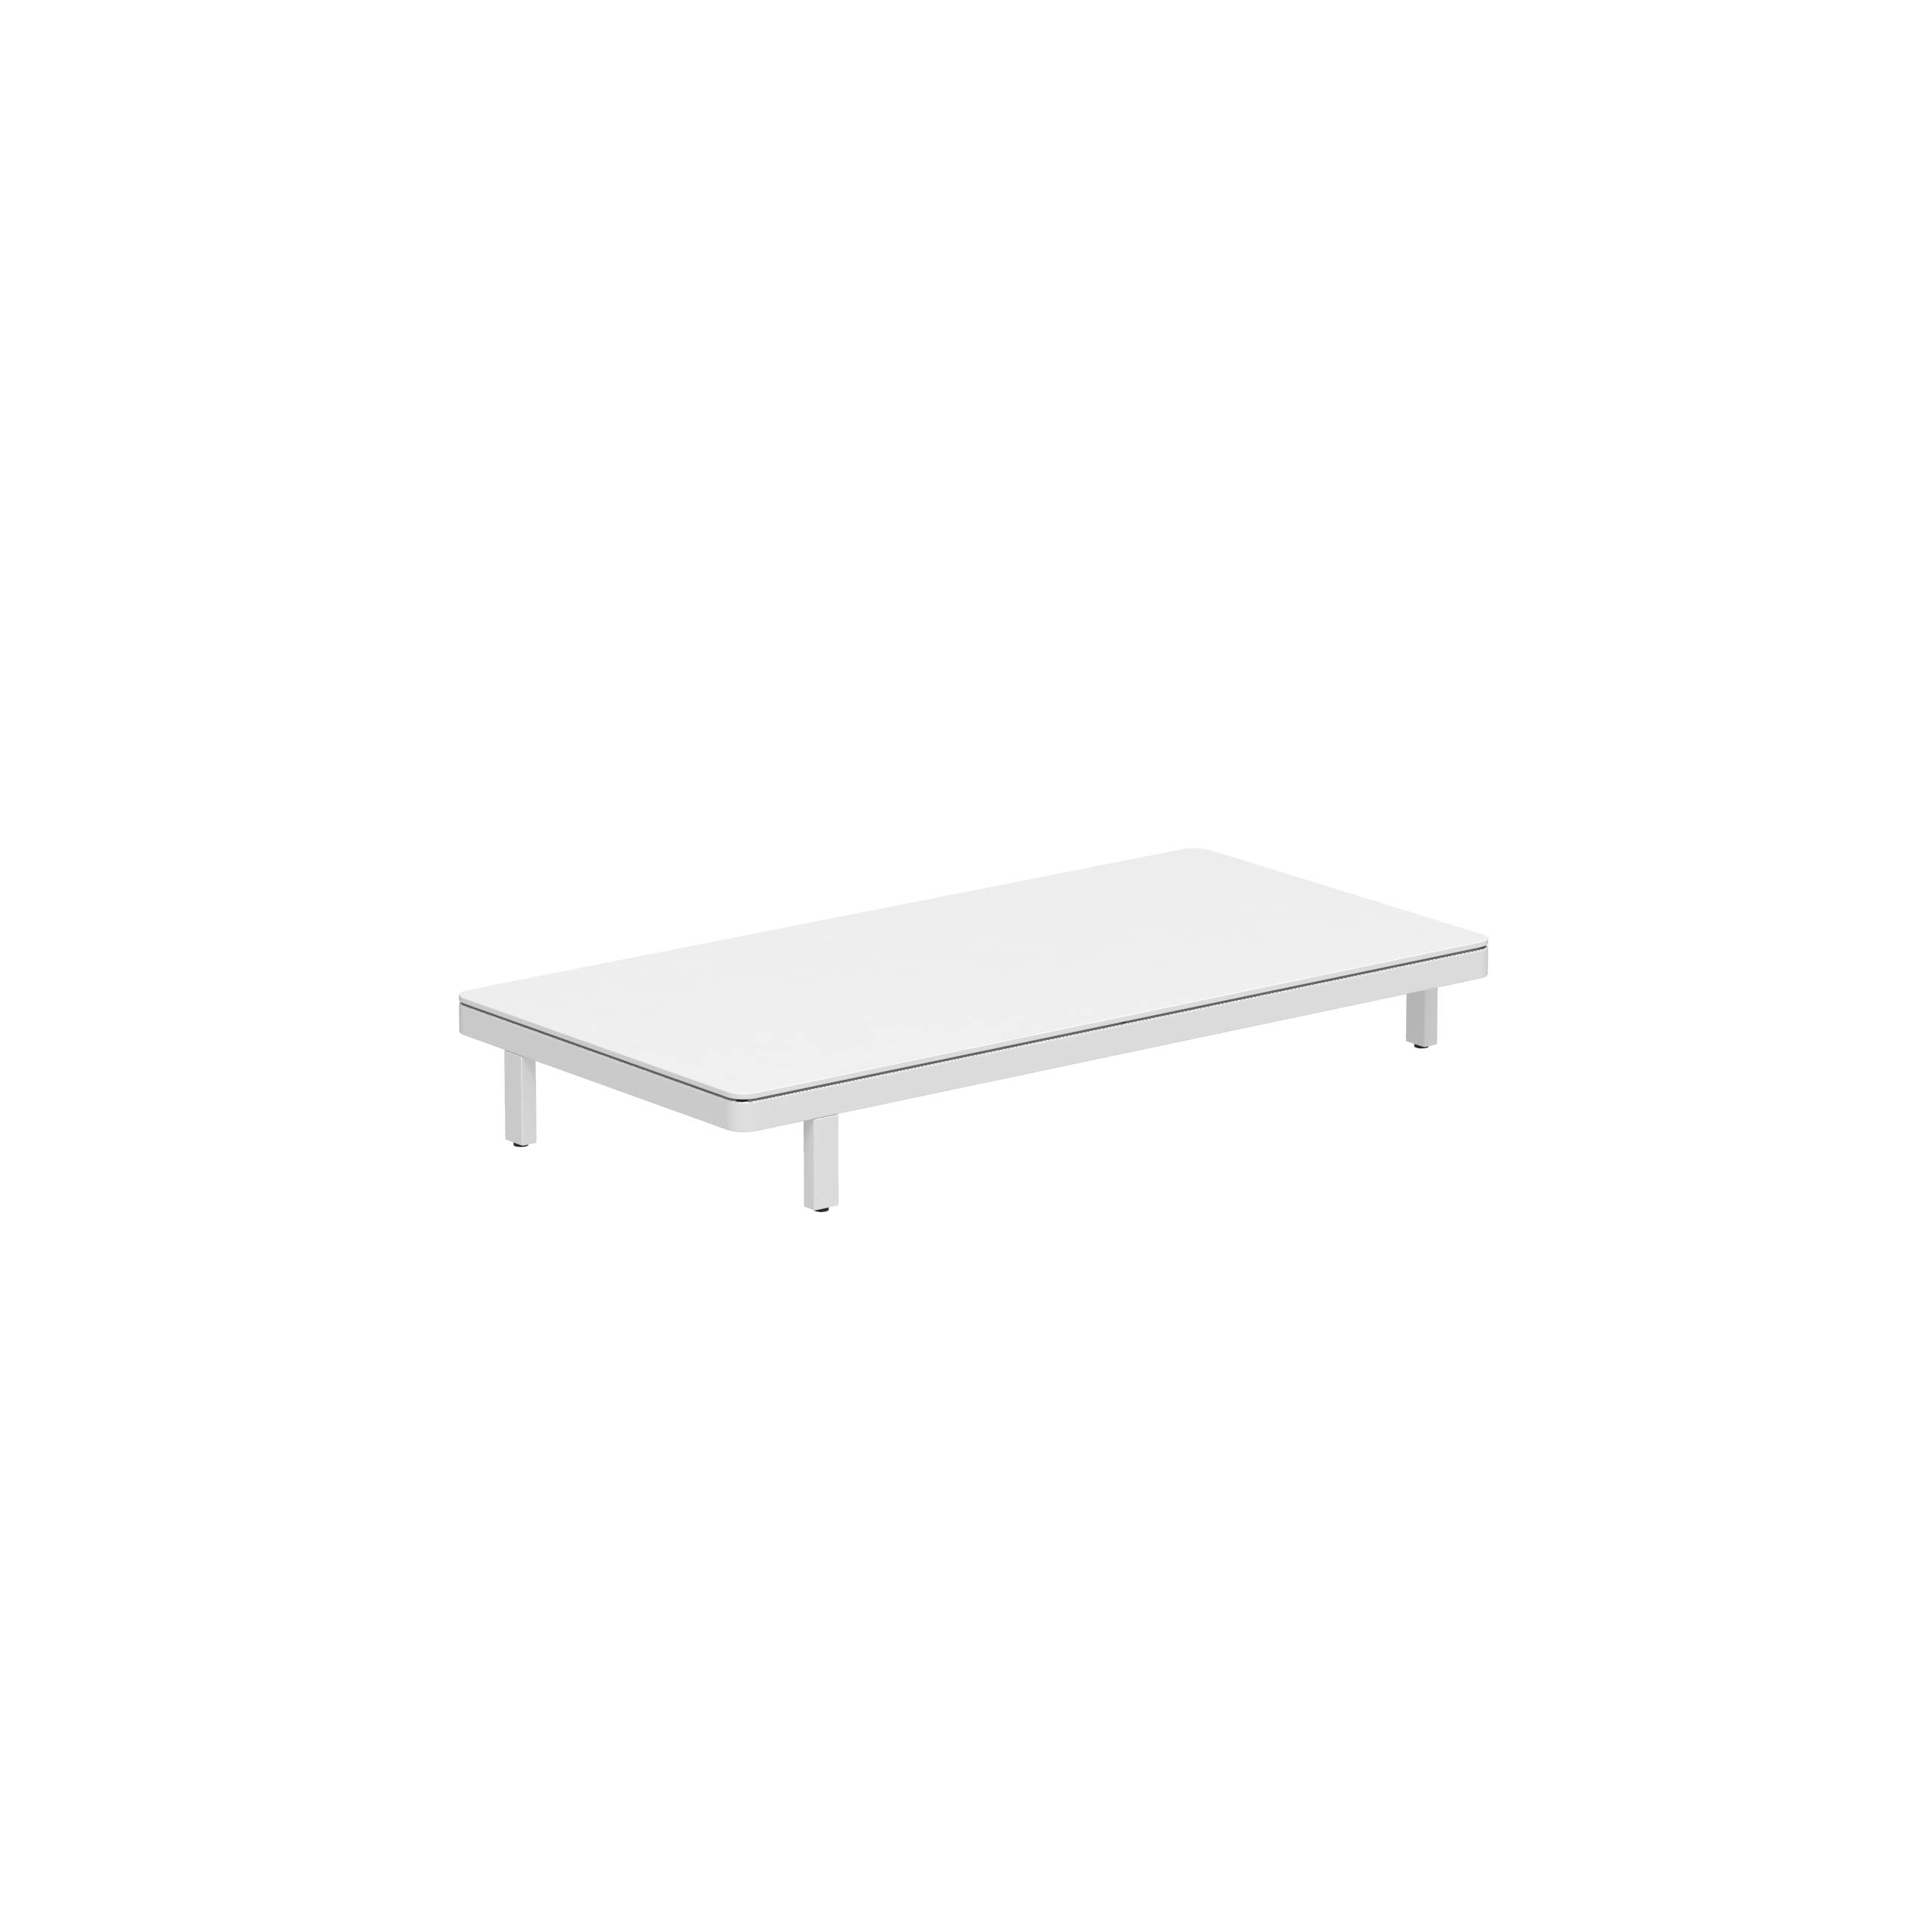 Alura Lounge 160 Ltl Table 160x80x23cm White Tabletop Ceramic White